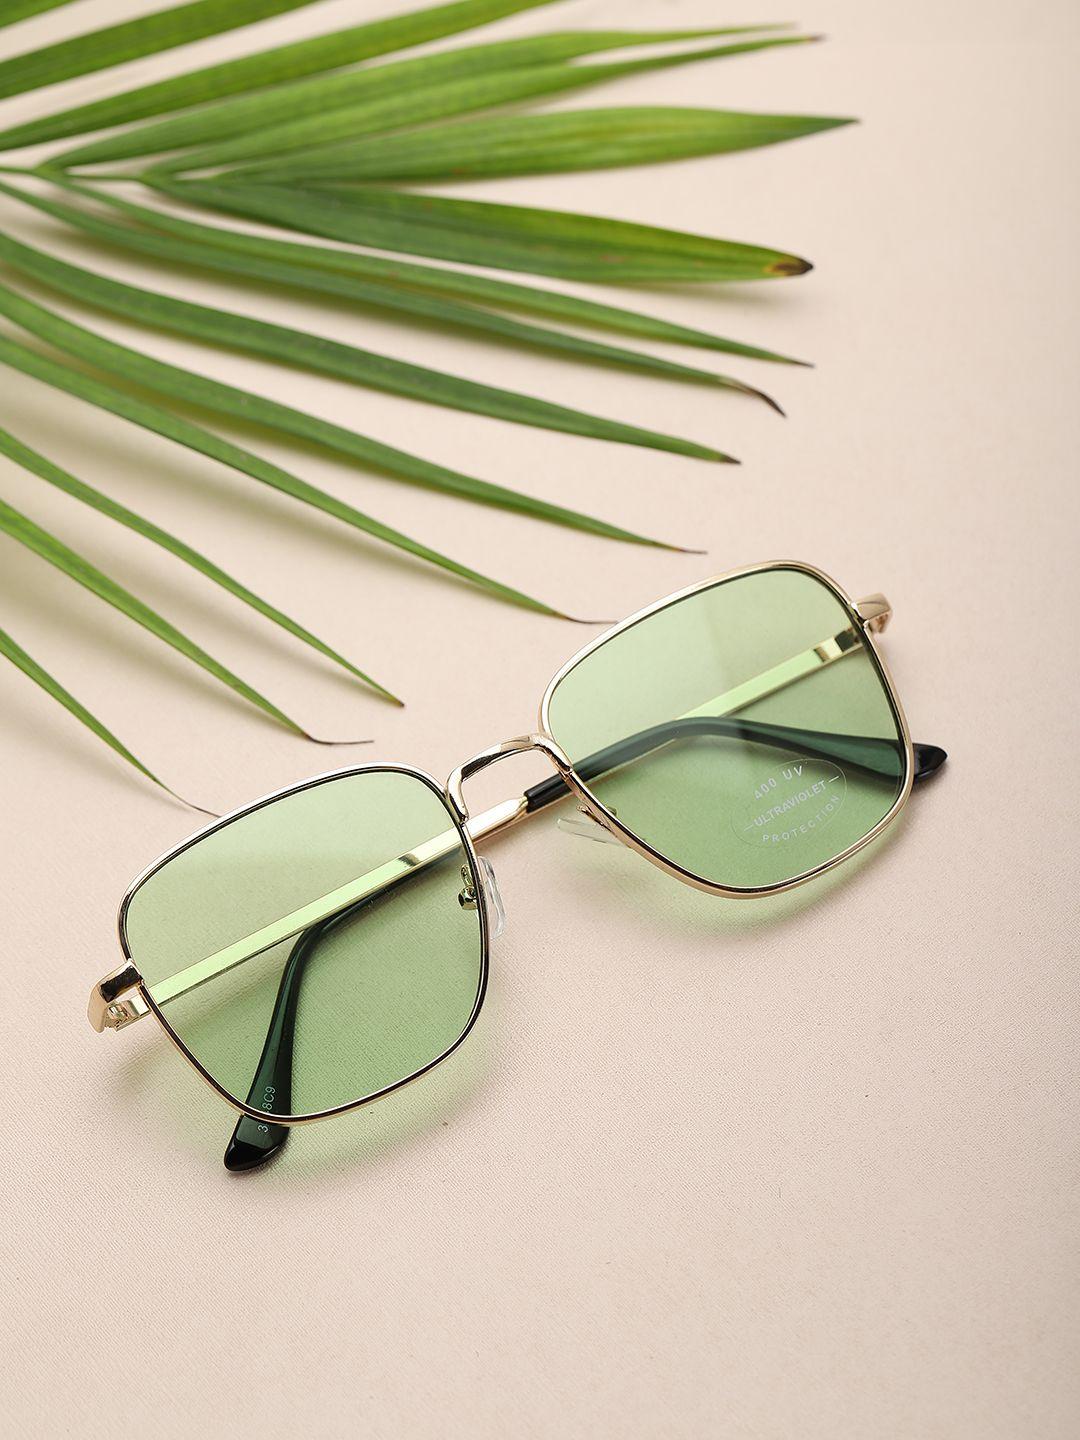 carlton-london-men-green-lens-&-gold-toned-square-sunglasses-with-uv-protected-lens